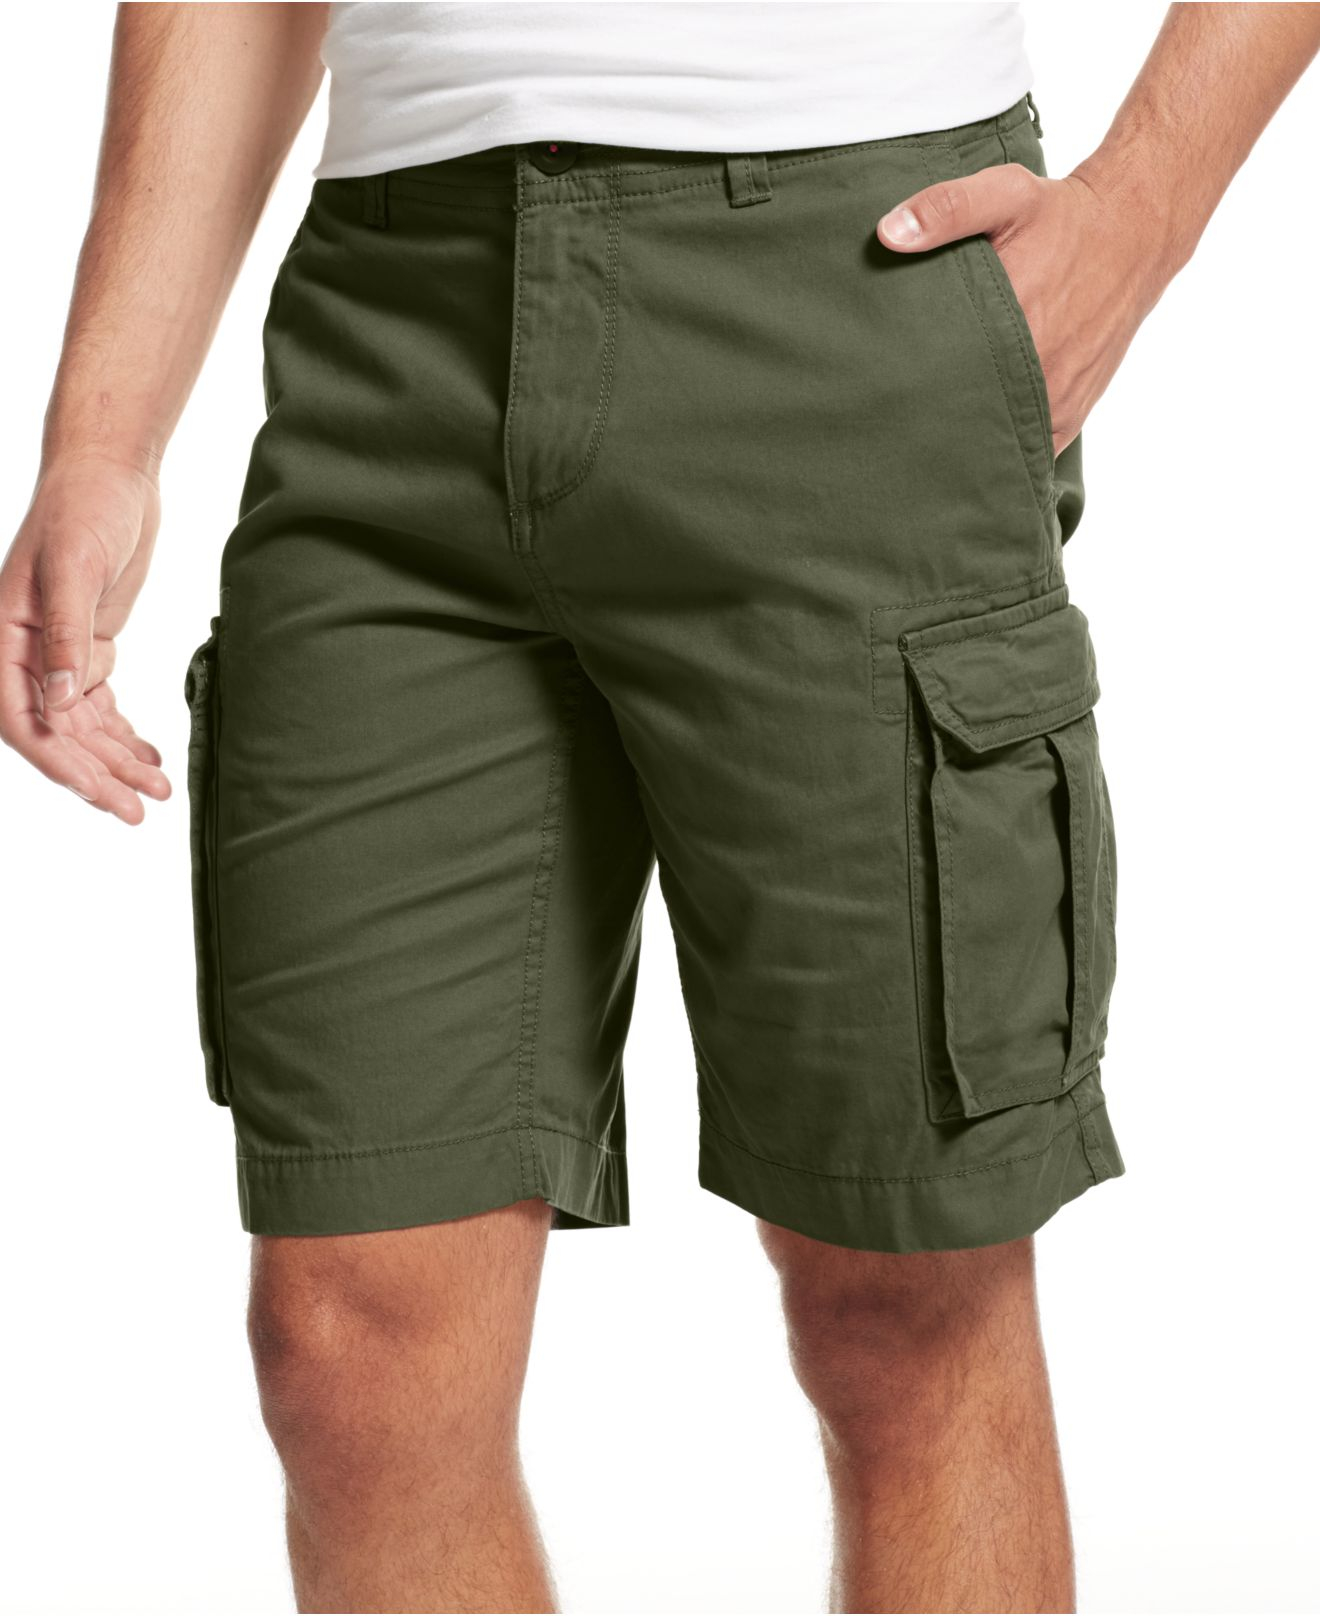 hilfiger cargo shorts